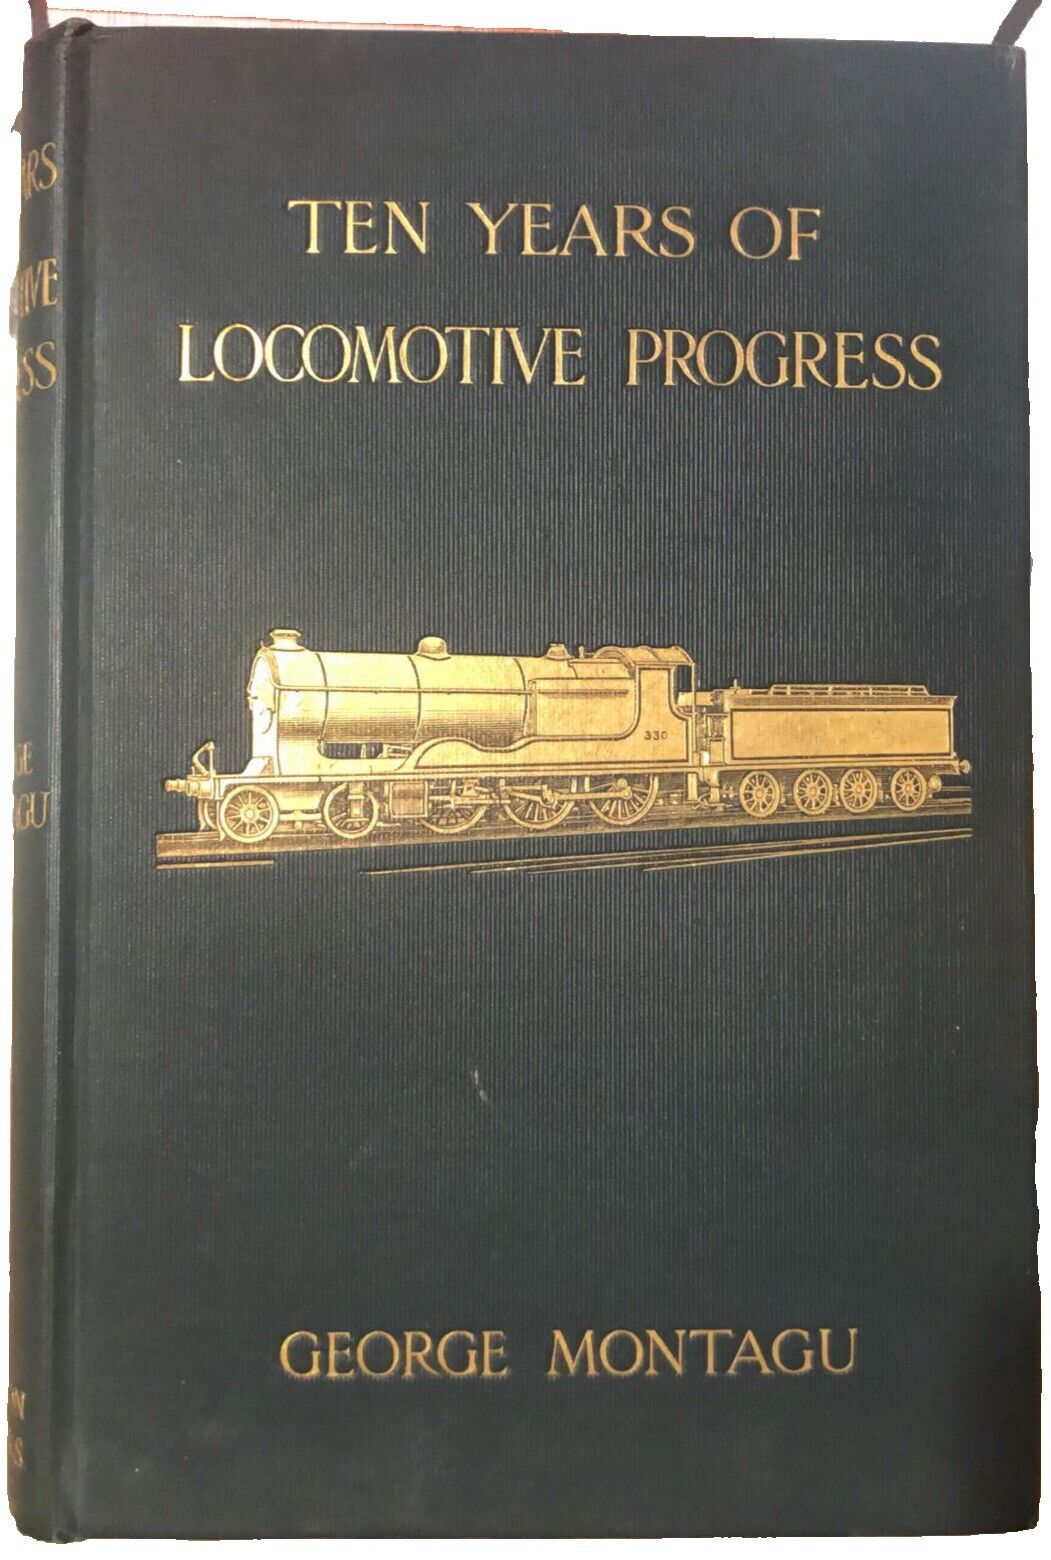 Ten Years of Locomotive Progress, by George Montagu (Alston Rivers Ltd 1907)